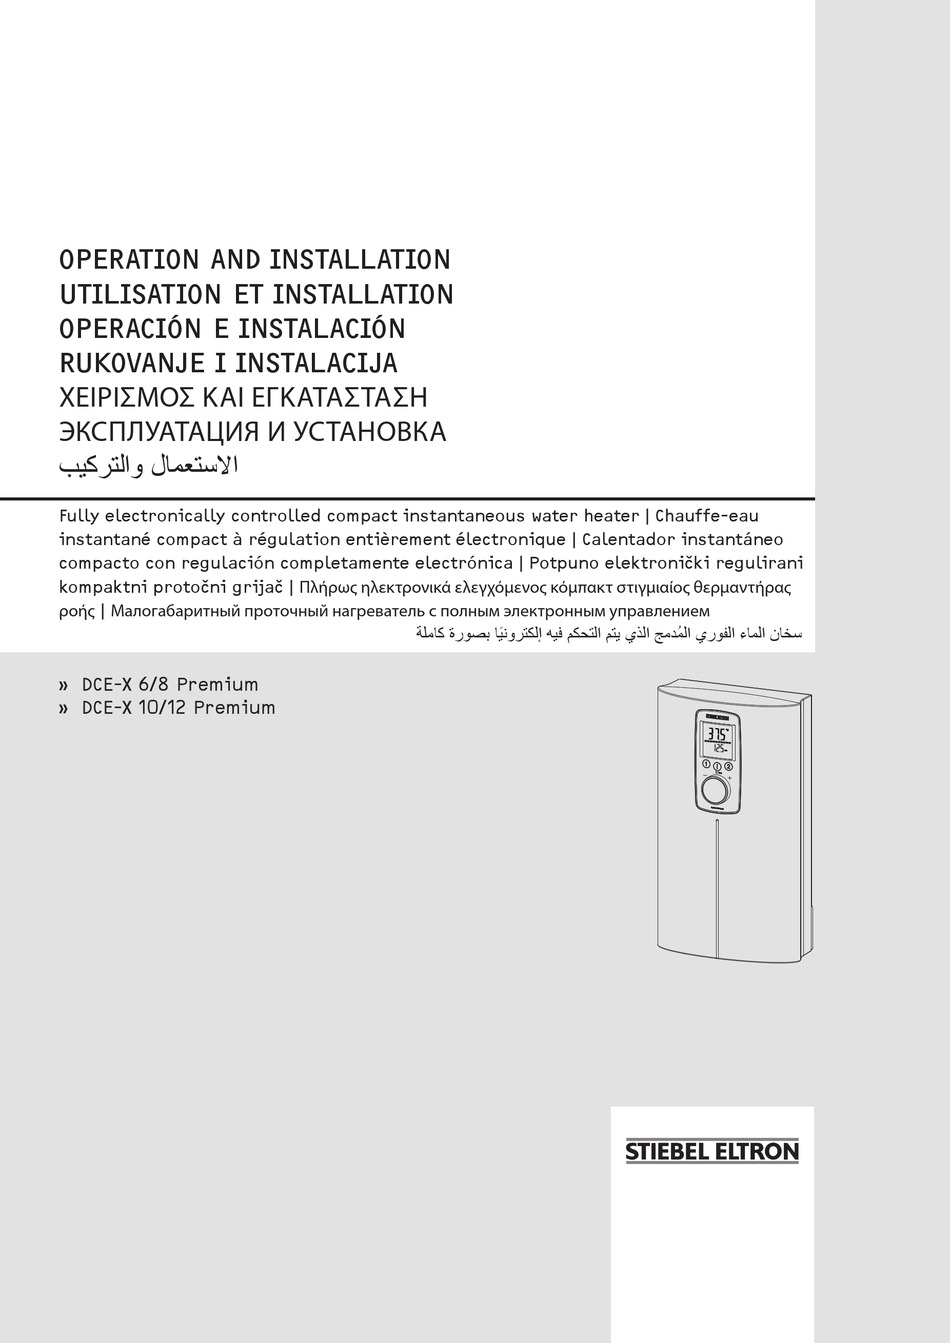 STIEBEL ELTRON DCE-X 6/8 PREMIUM OPERATION AND INSTALLATION Pdf .